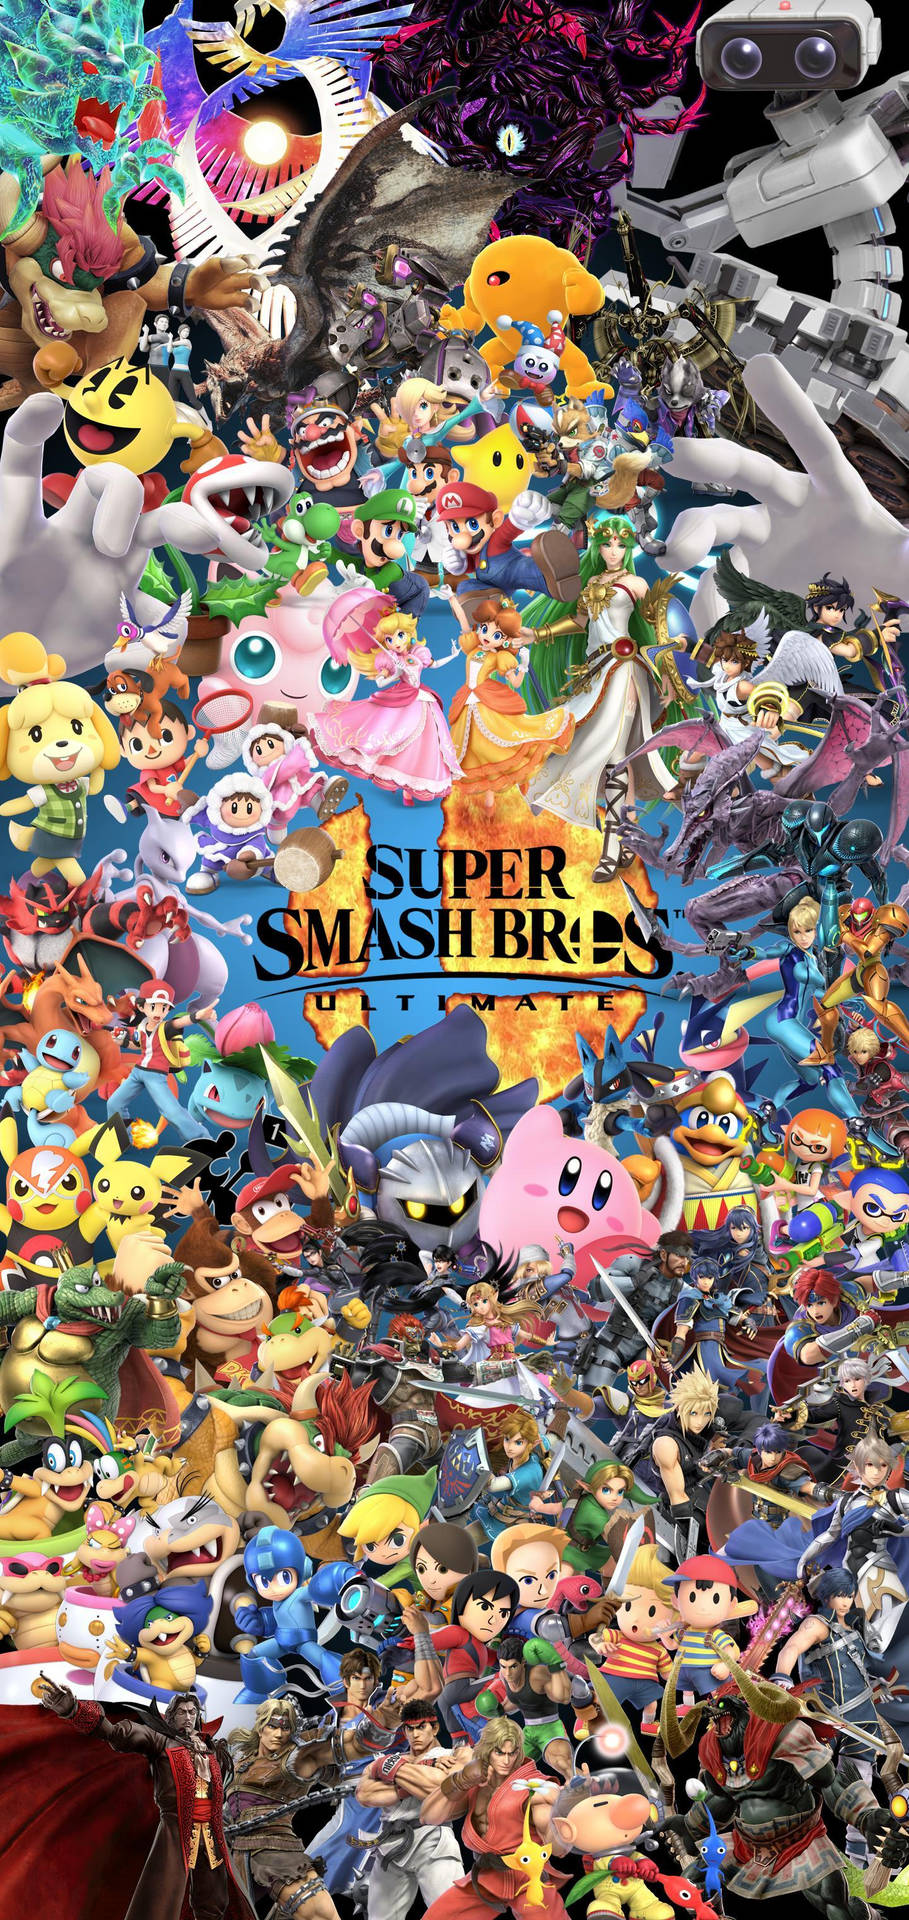 Free Super Smash Bros Ultimate Wallpaper Downloads, [100+] Super Smash Bros  Ultimate Wallpapers for FREE 